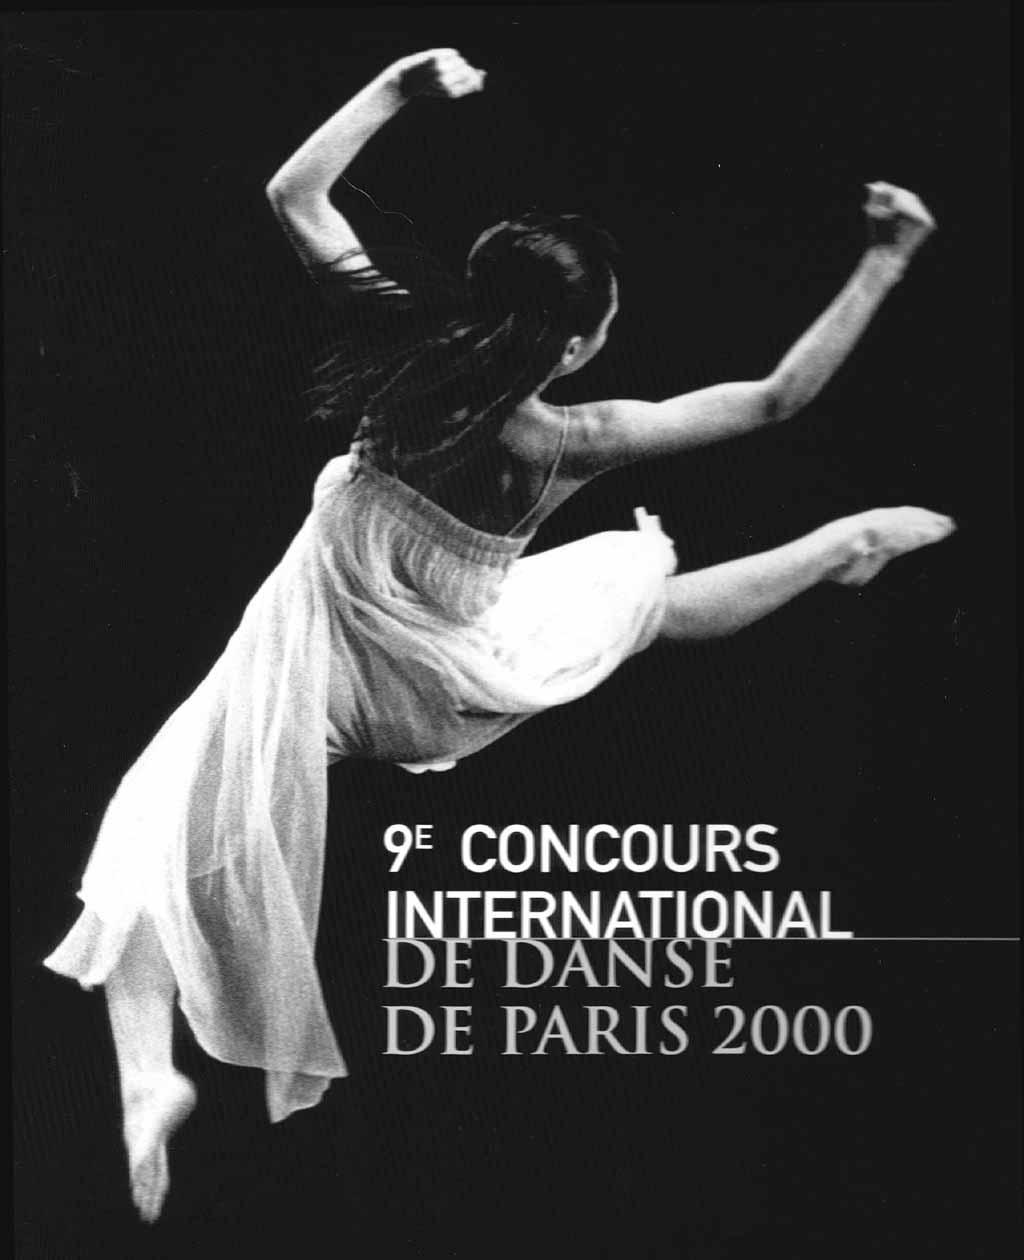 ... Francuska /Pariz/ Concours International de Danse de Paris Priliåno vaæan dogaðaj K ada je osnovano 1984.